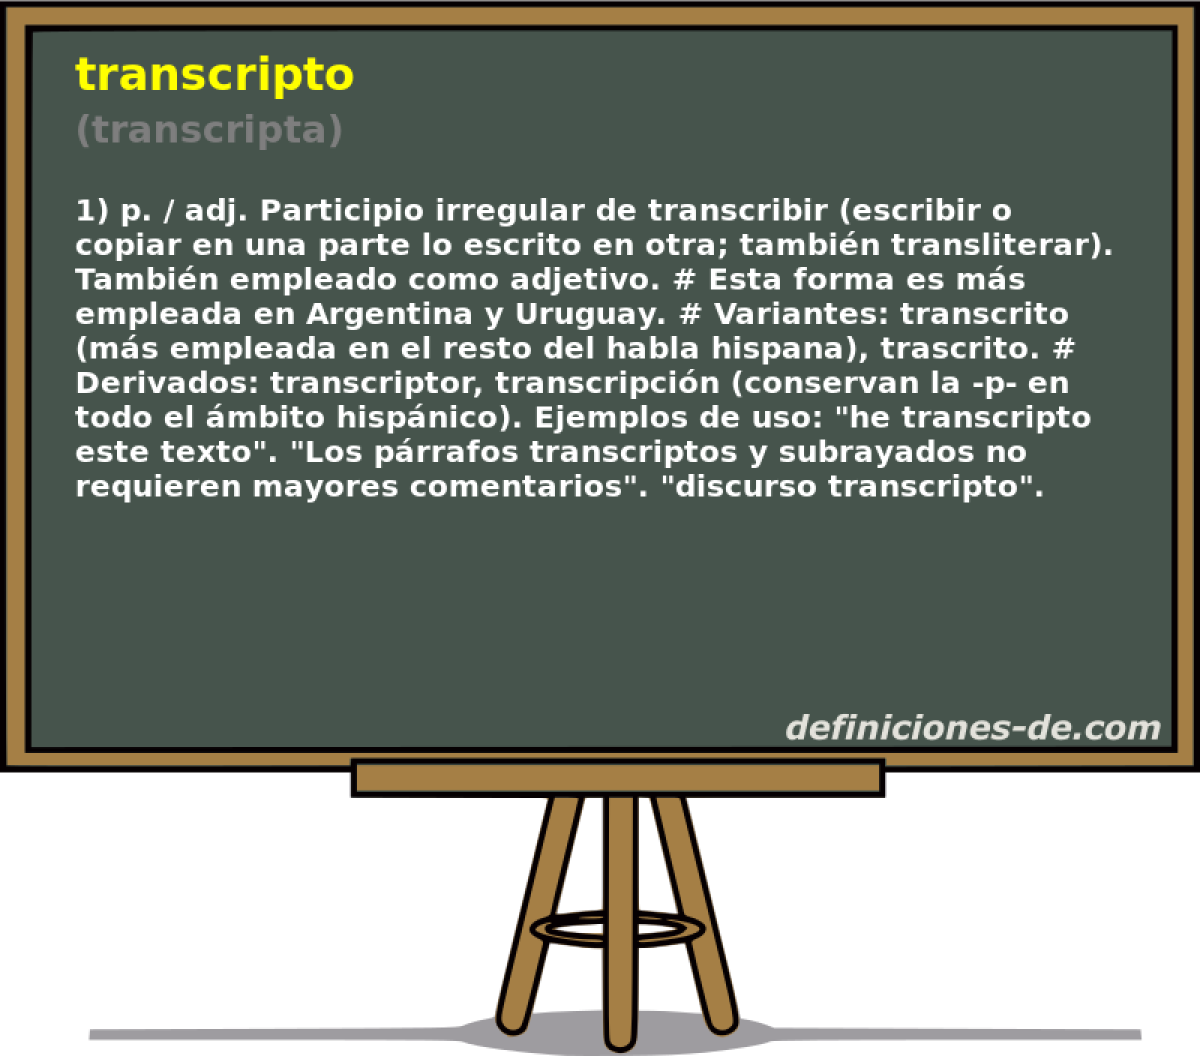 transcripto (transcripta)